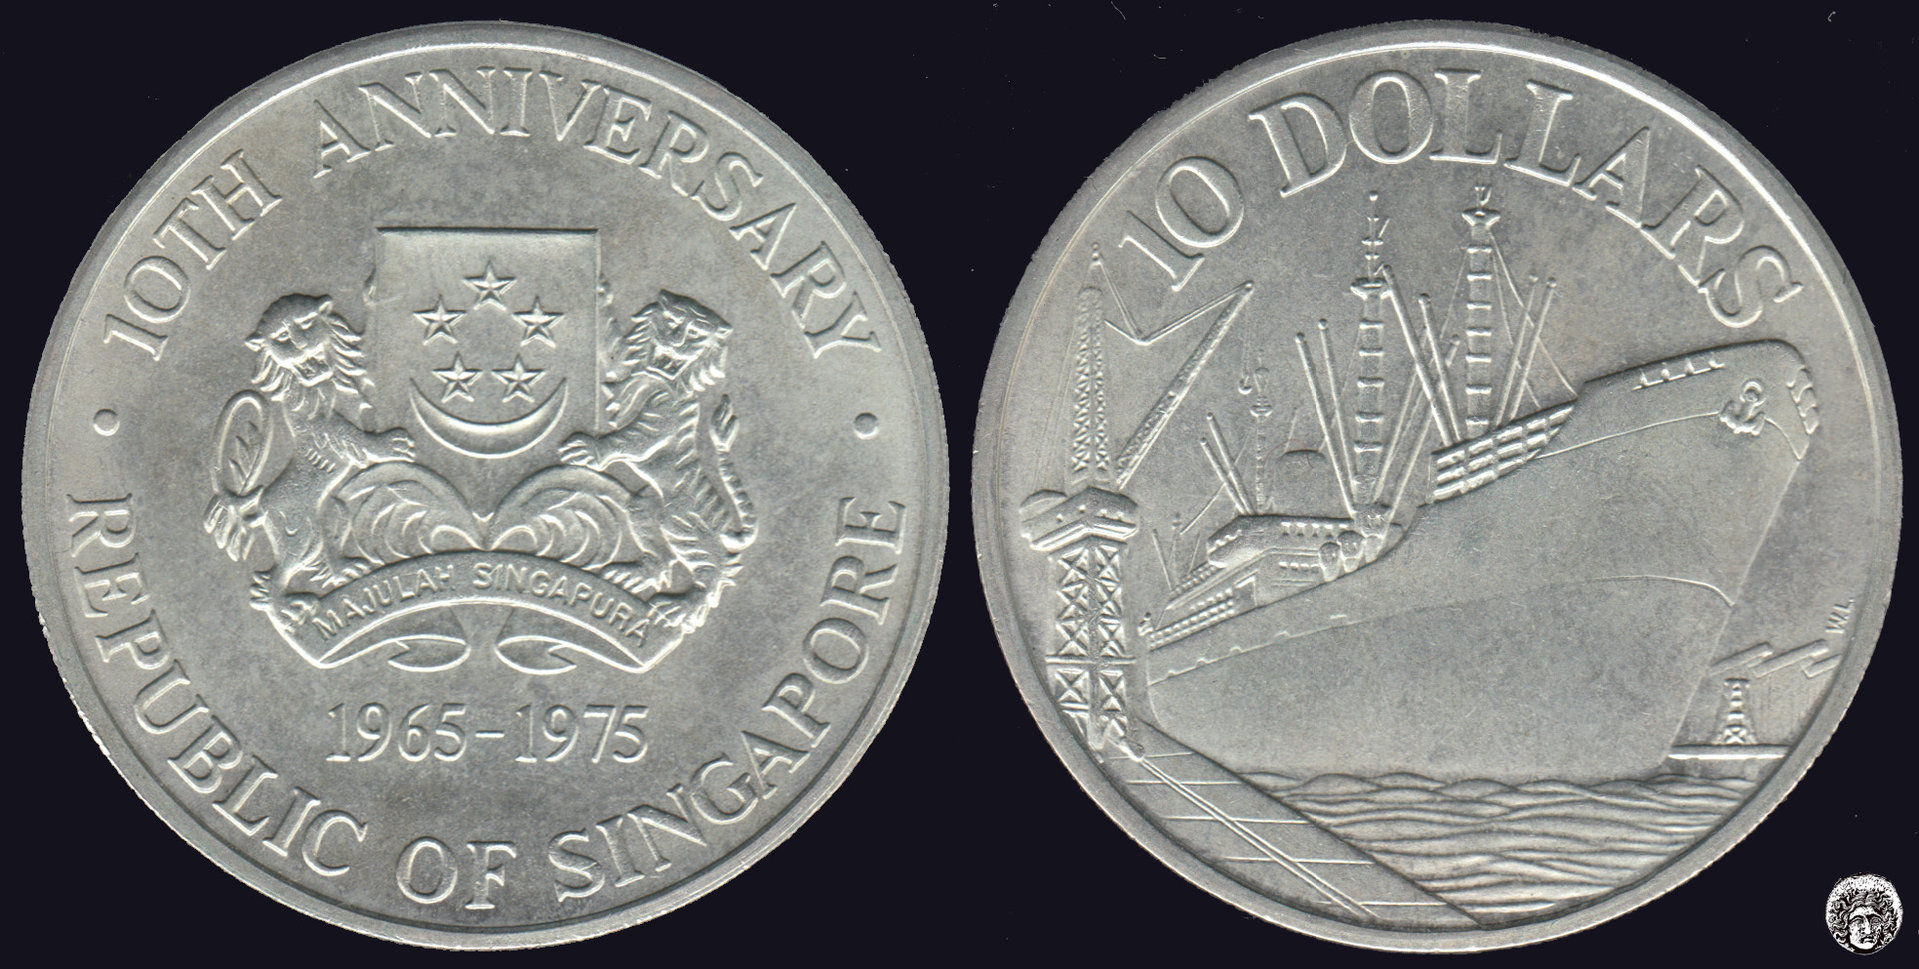 SINGAPUR - SINGAPORE. 10 DOLARES (DOLLARS) DE 1975. PLATA 0.500. (3)